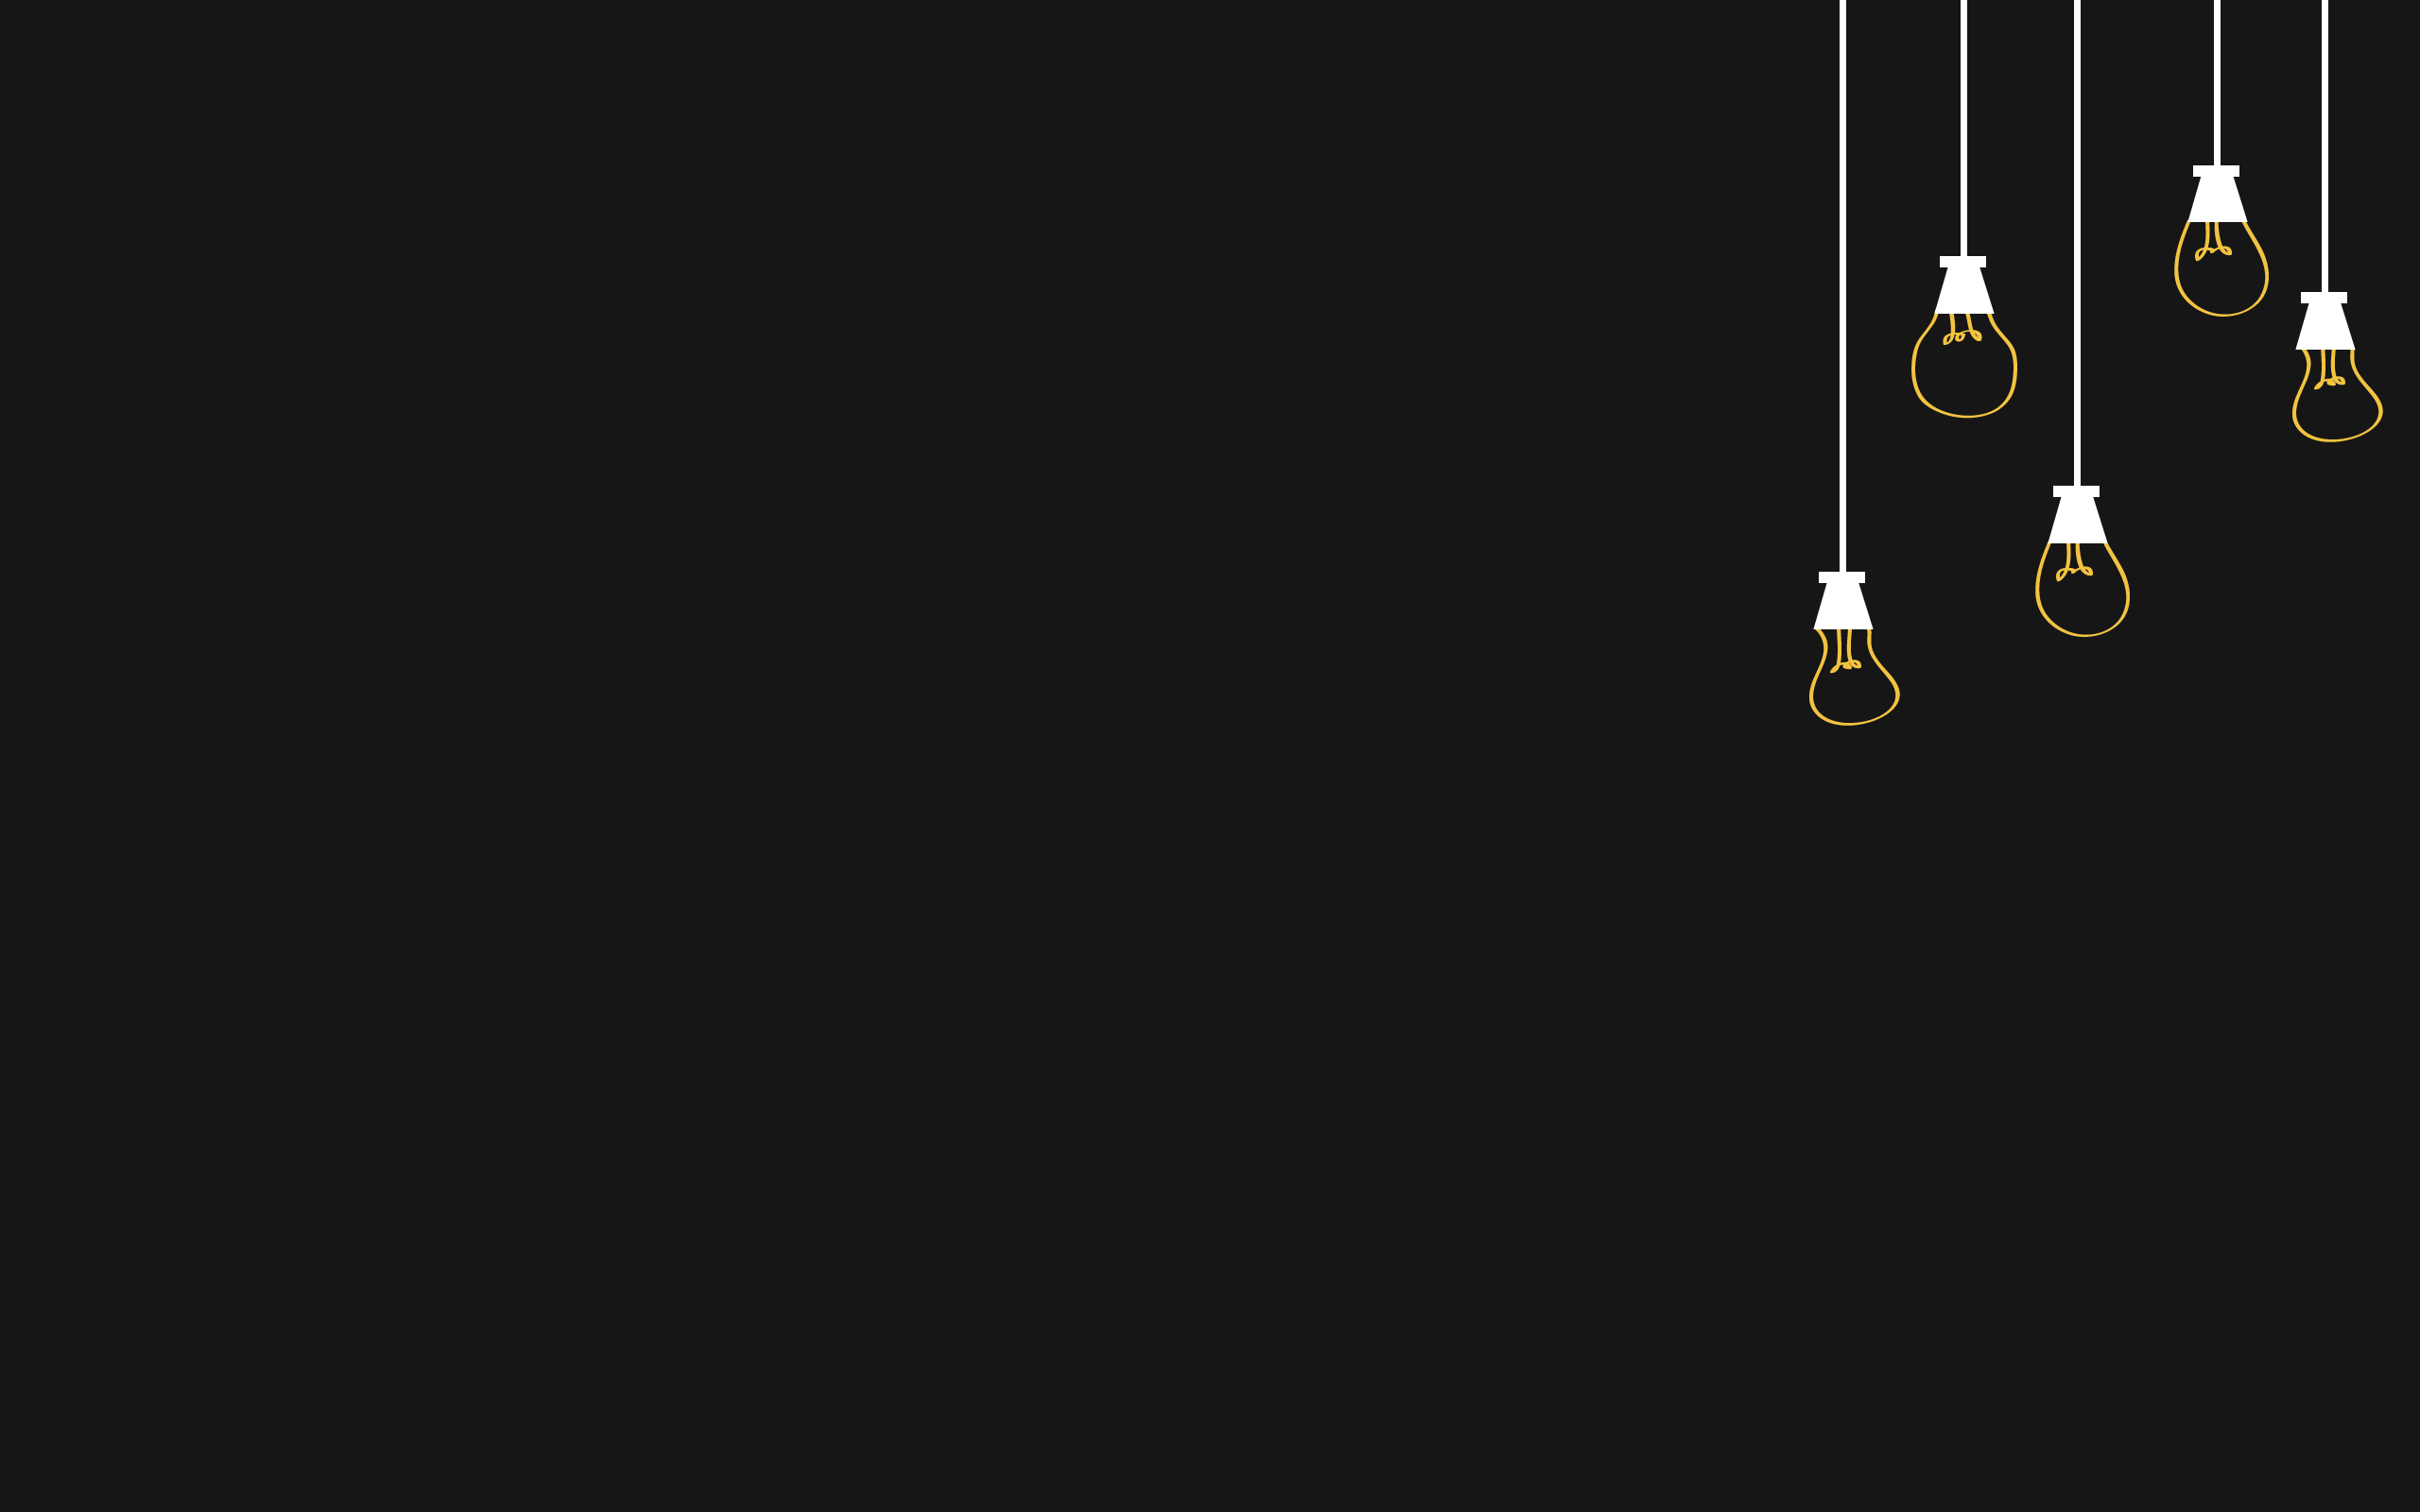 General 2560x1600 minimalism light bulb artwork black background simple background